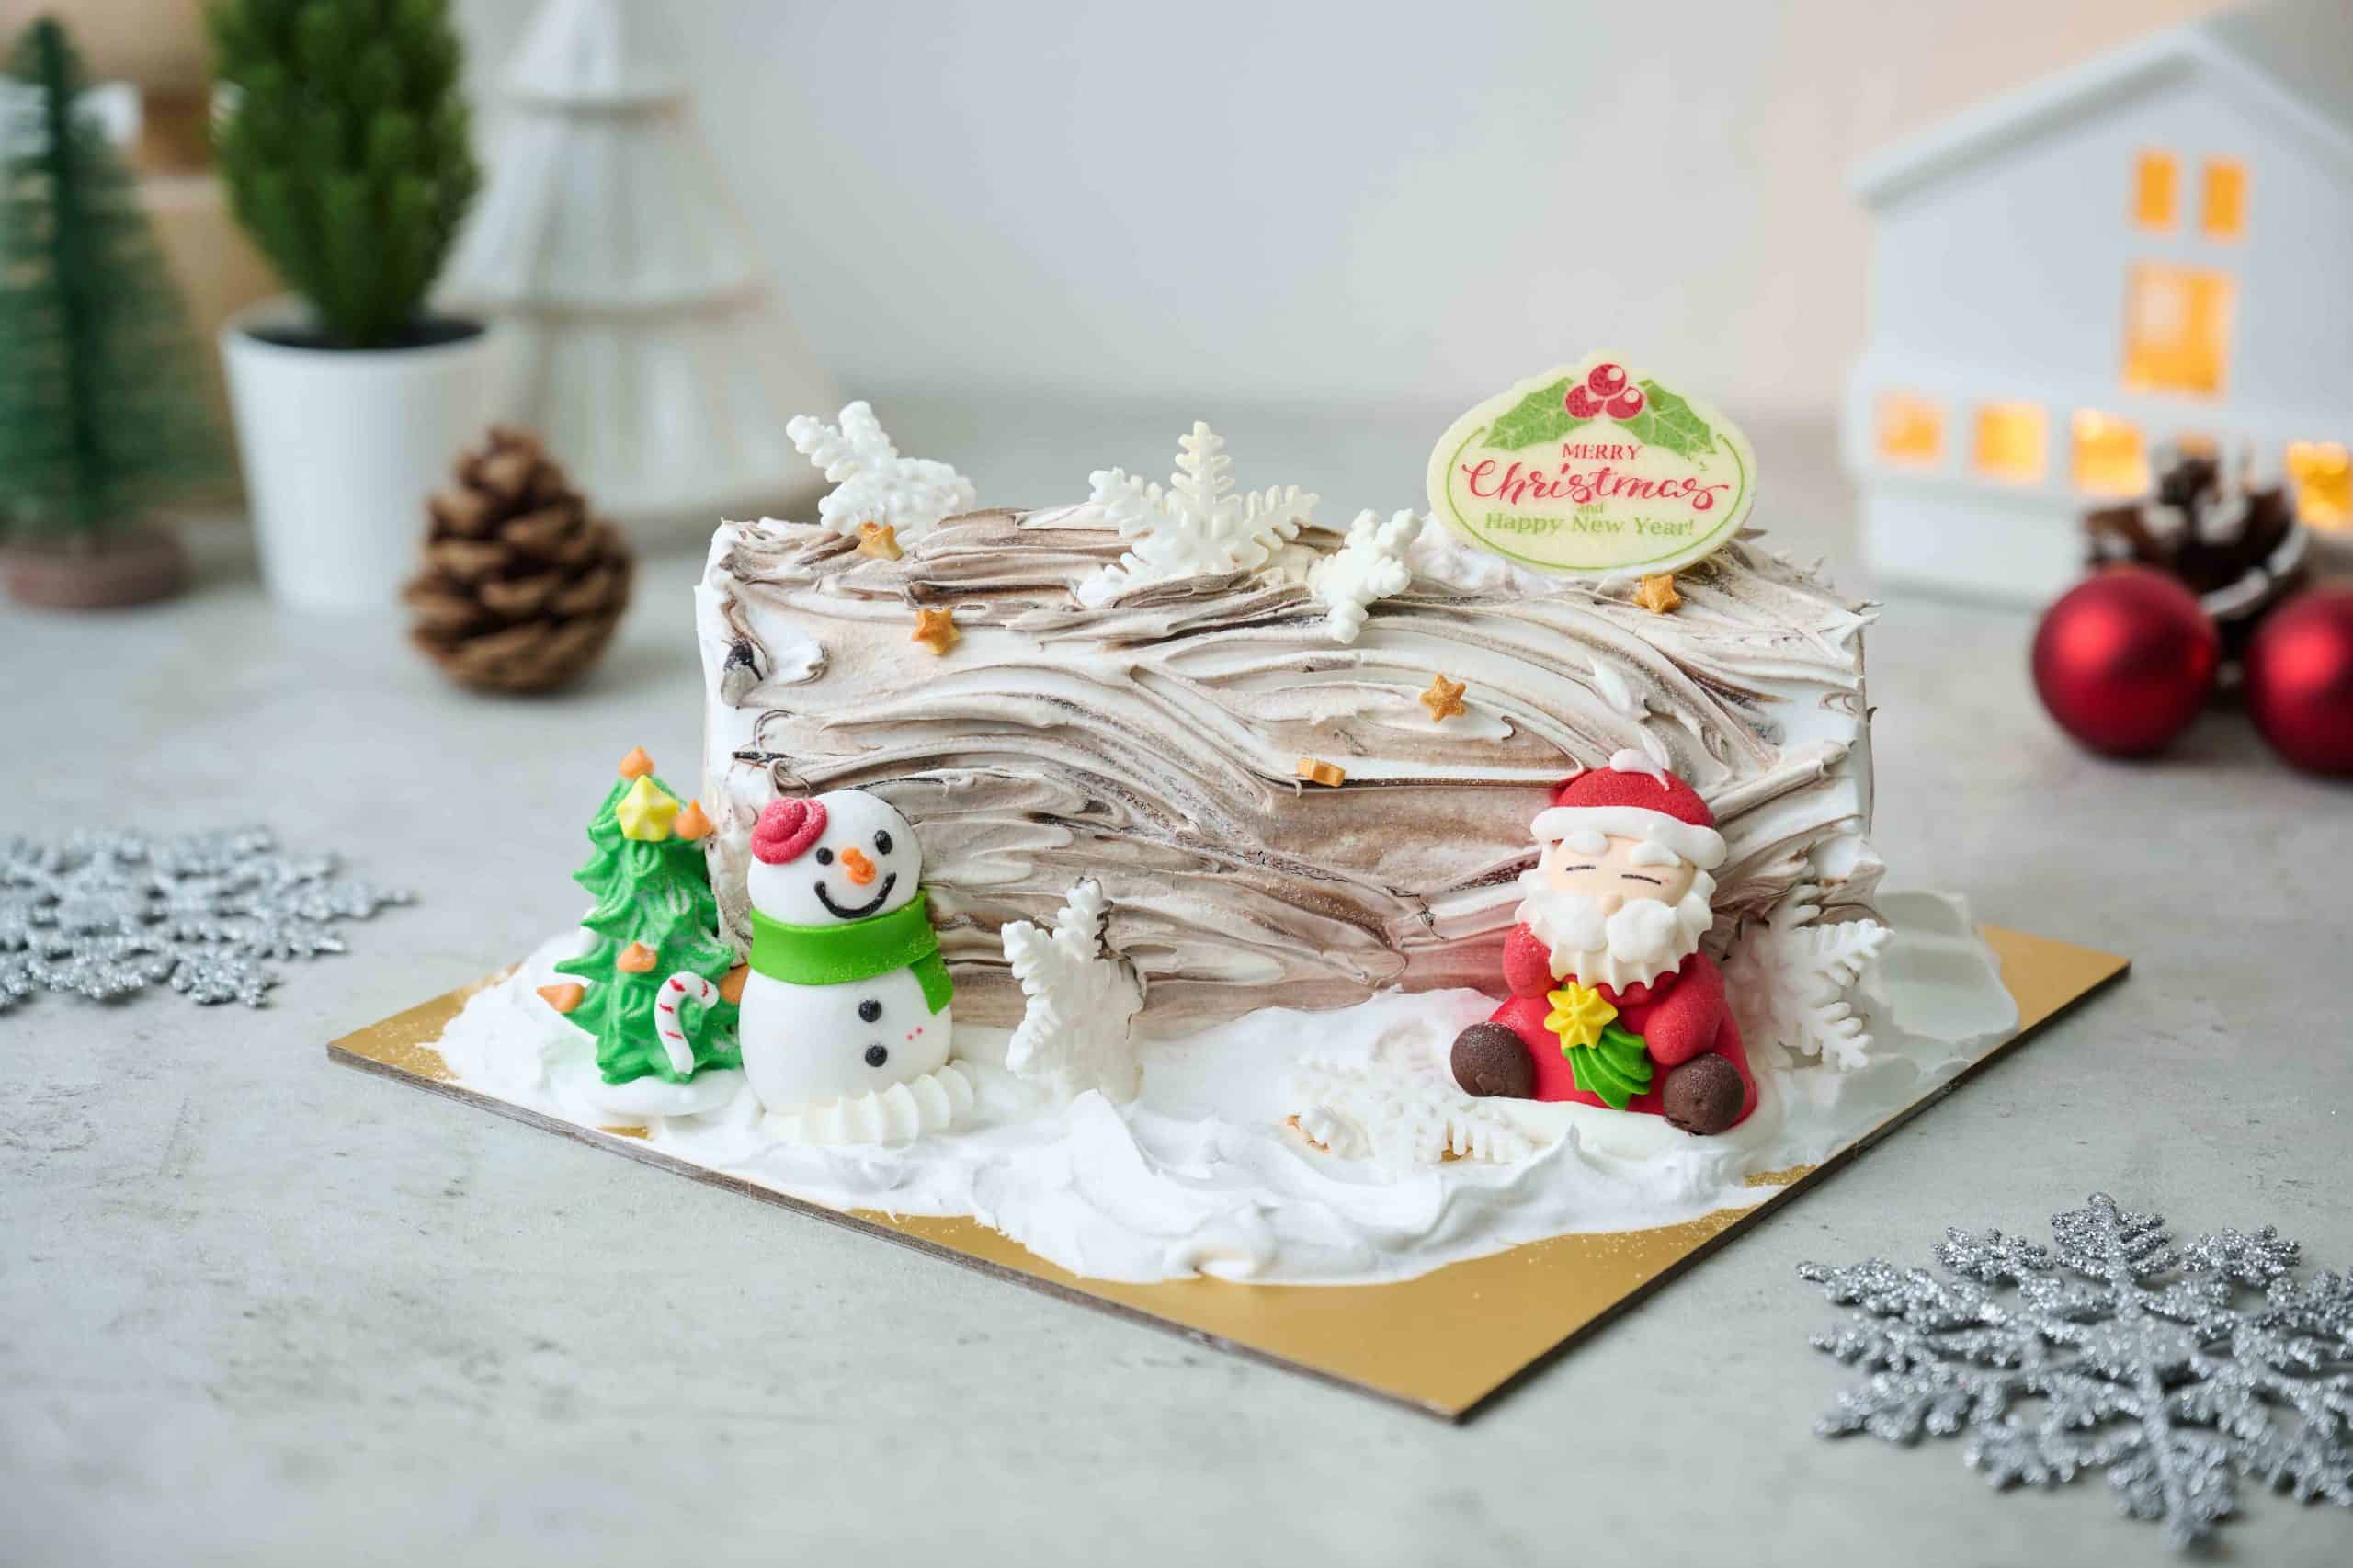 Twelve Cupcakes - Let it snow! Let it snow! Christmas Log Cake